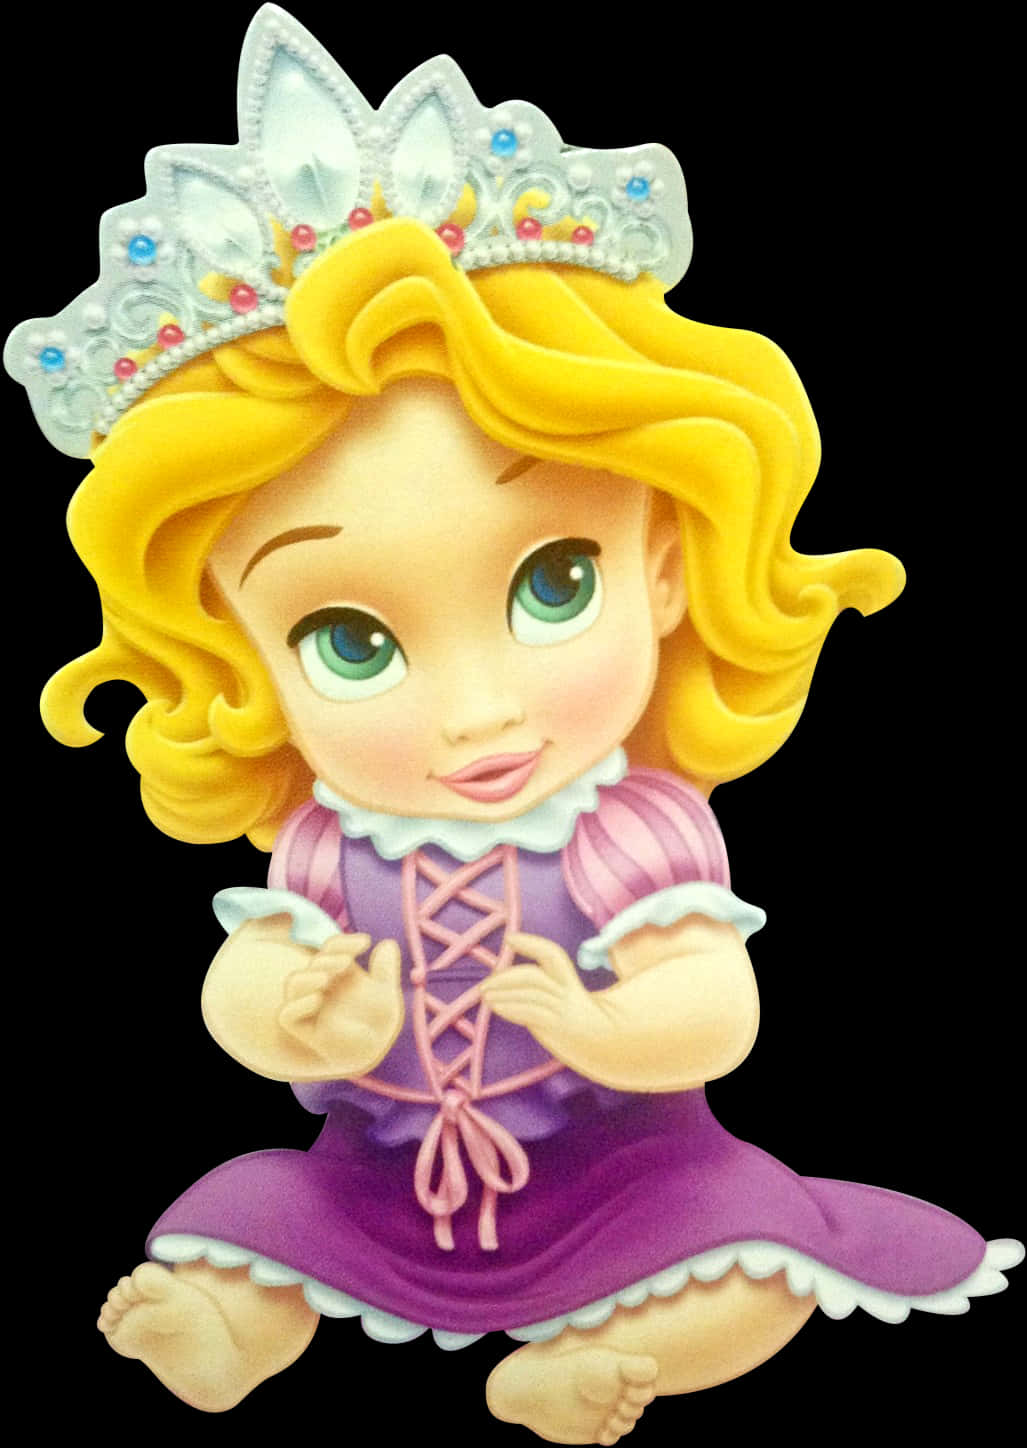 Animated Princess Cartoon Character PNG image